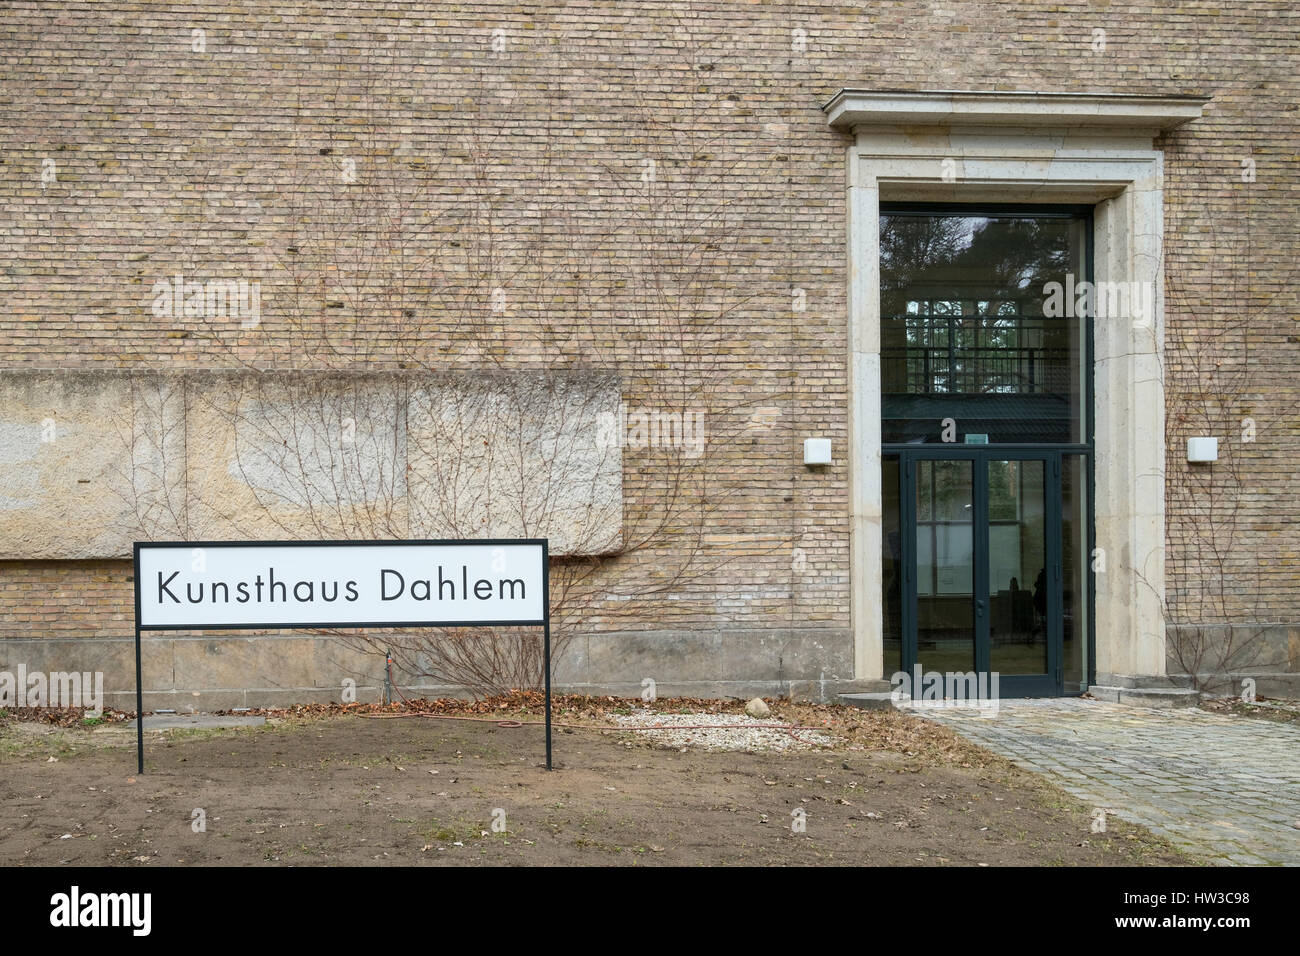 Kunsthaus Dahlem museum, an exhibition venue for postwar German modernism in Dahlem, Berlin , Germany Stock Photo